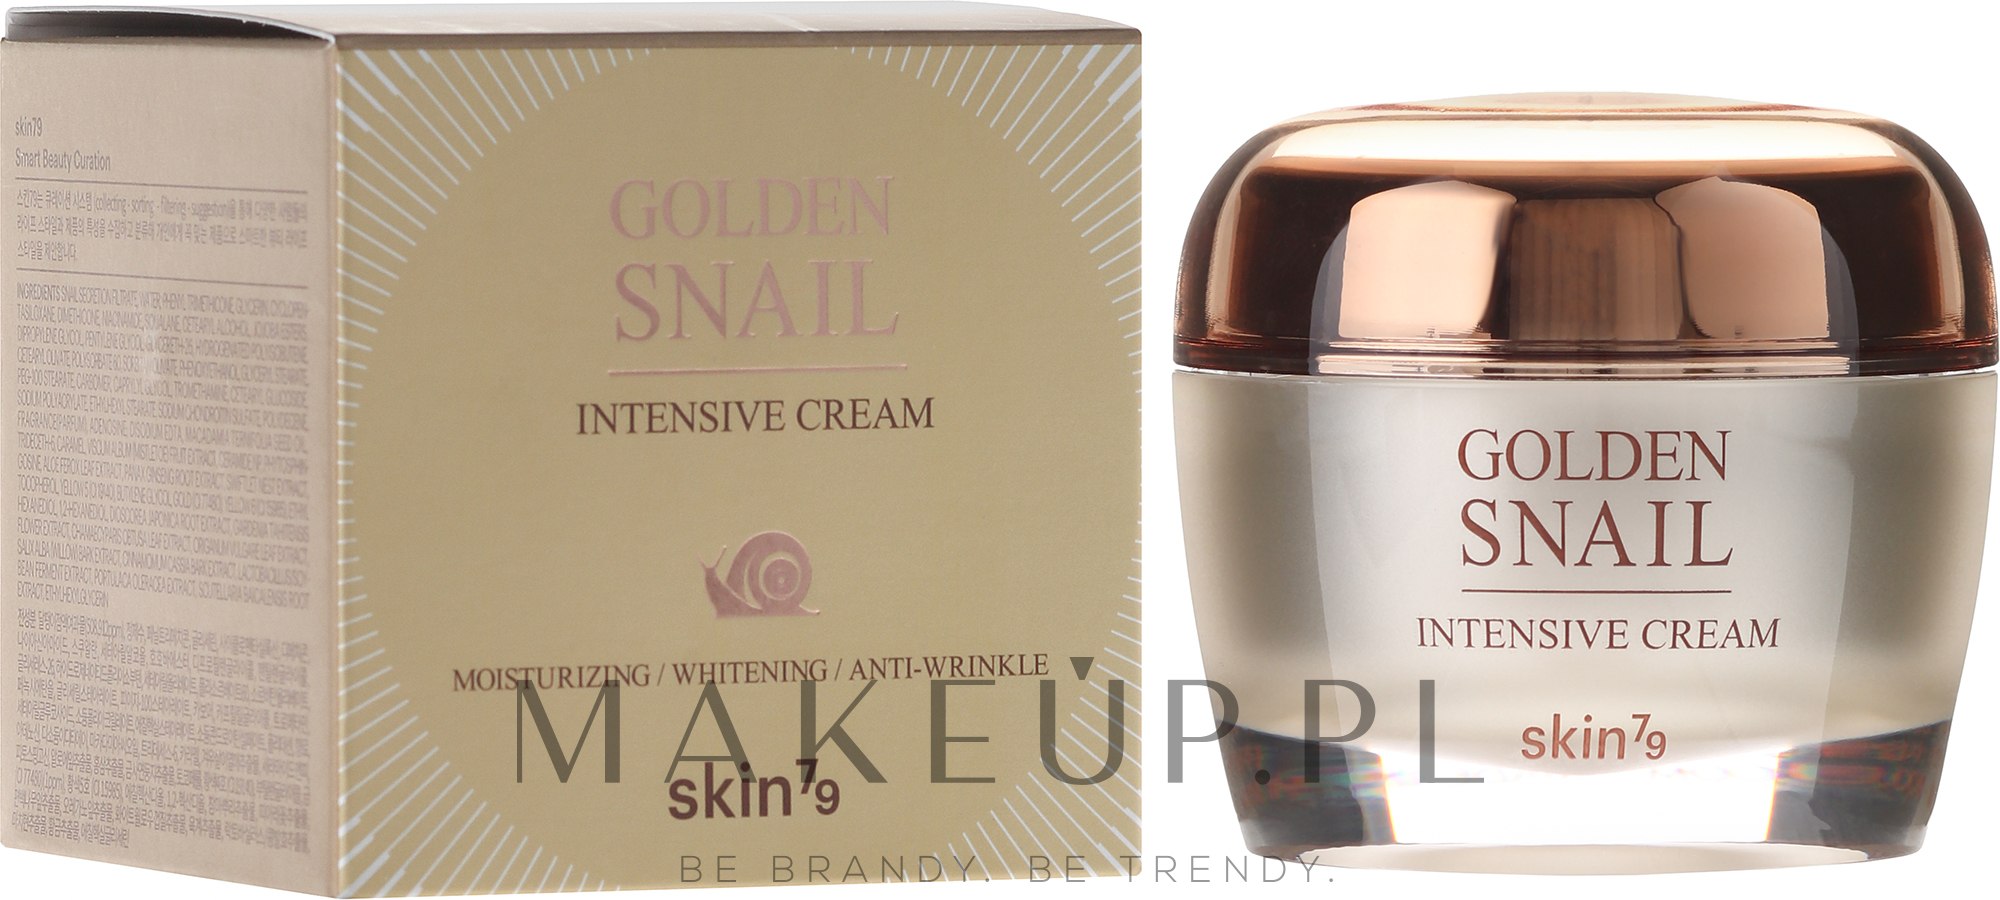 Intensywny krem ze śluzem ślimaka - Skin79 Golden Snail Intensive Cream — Zdjęcie 50 g